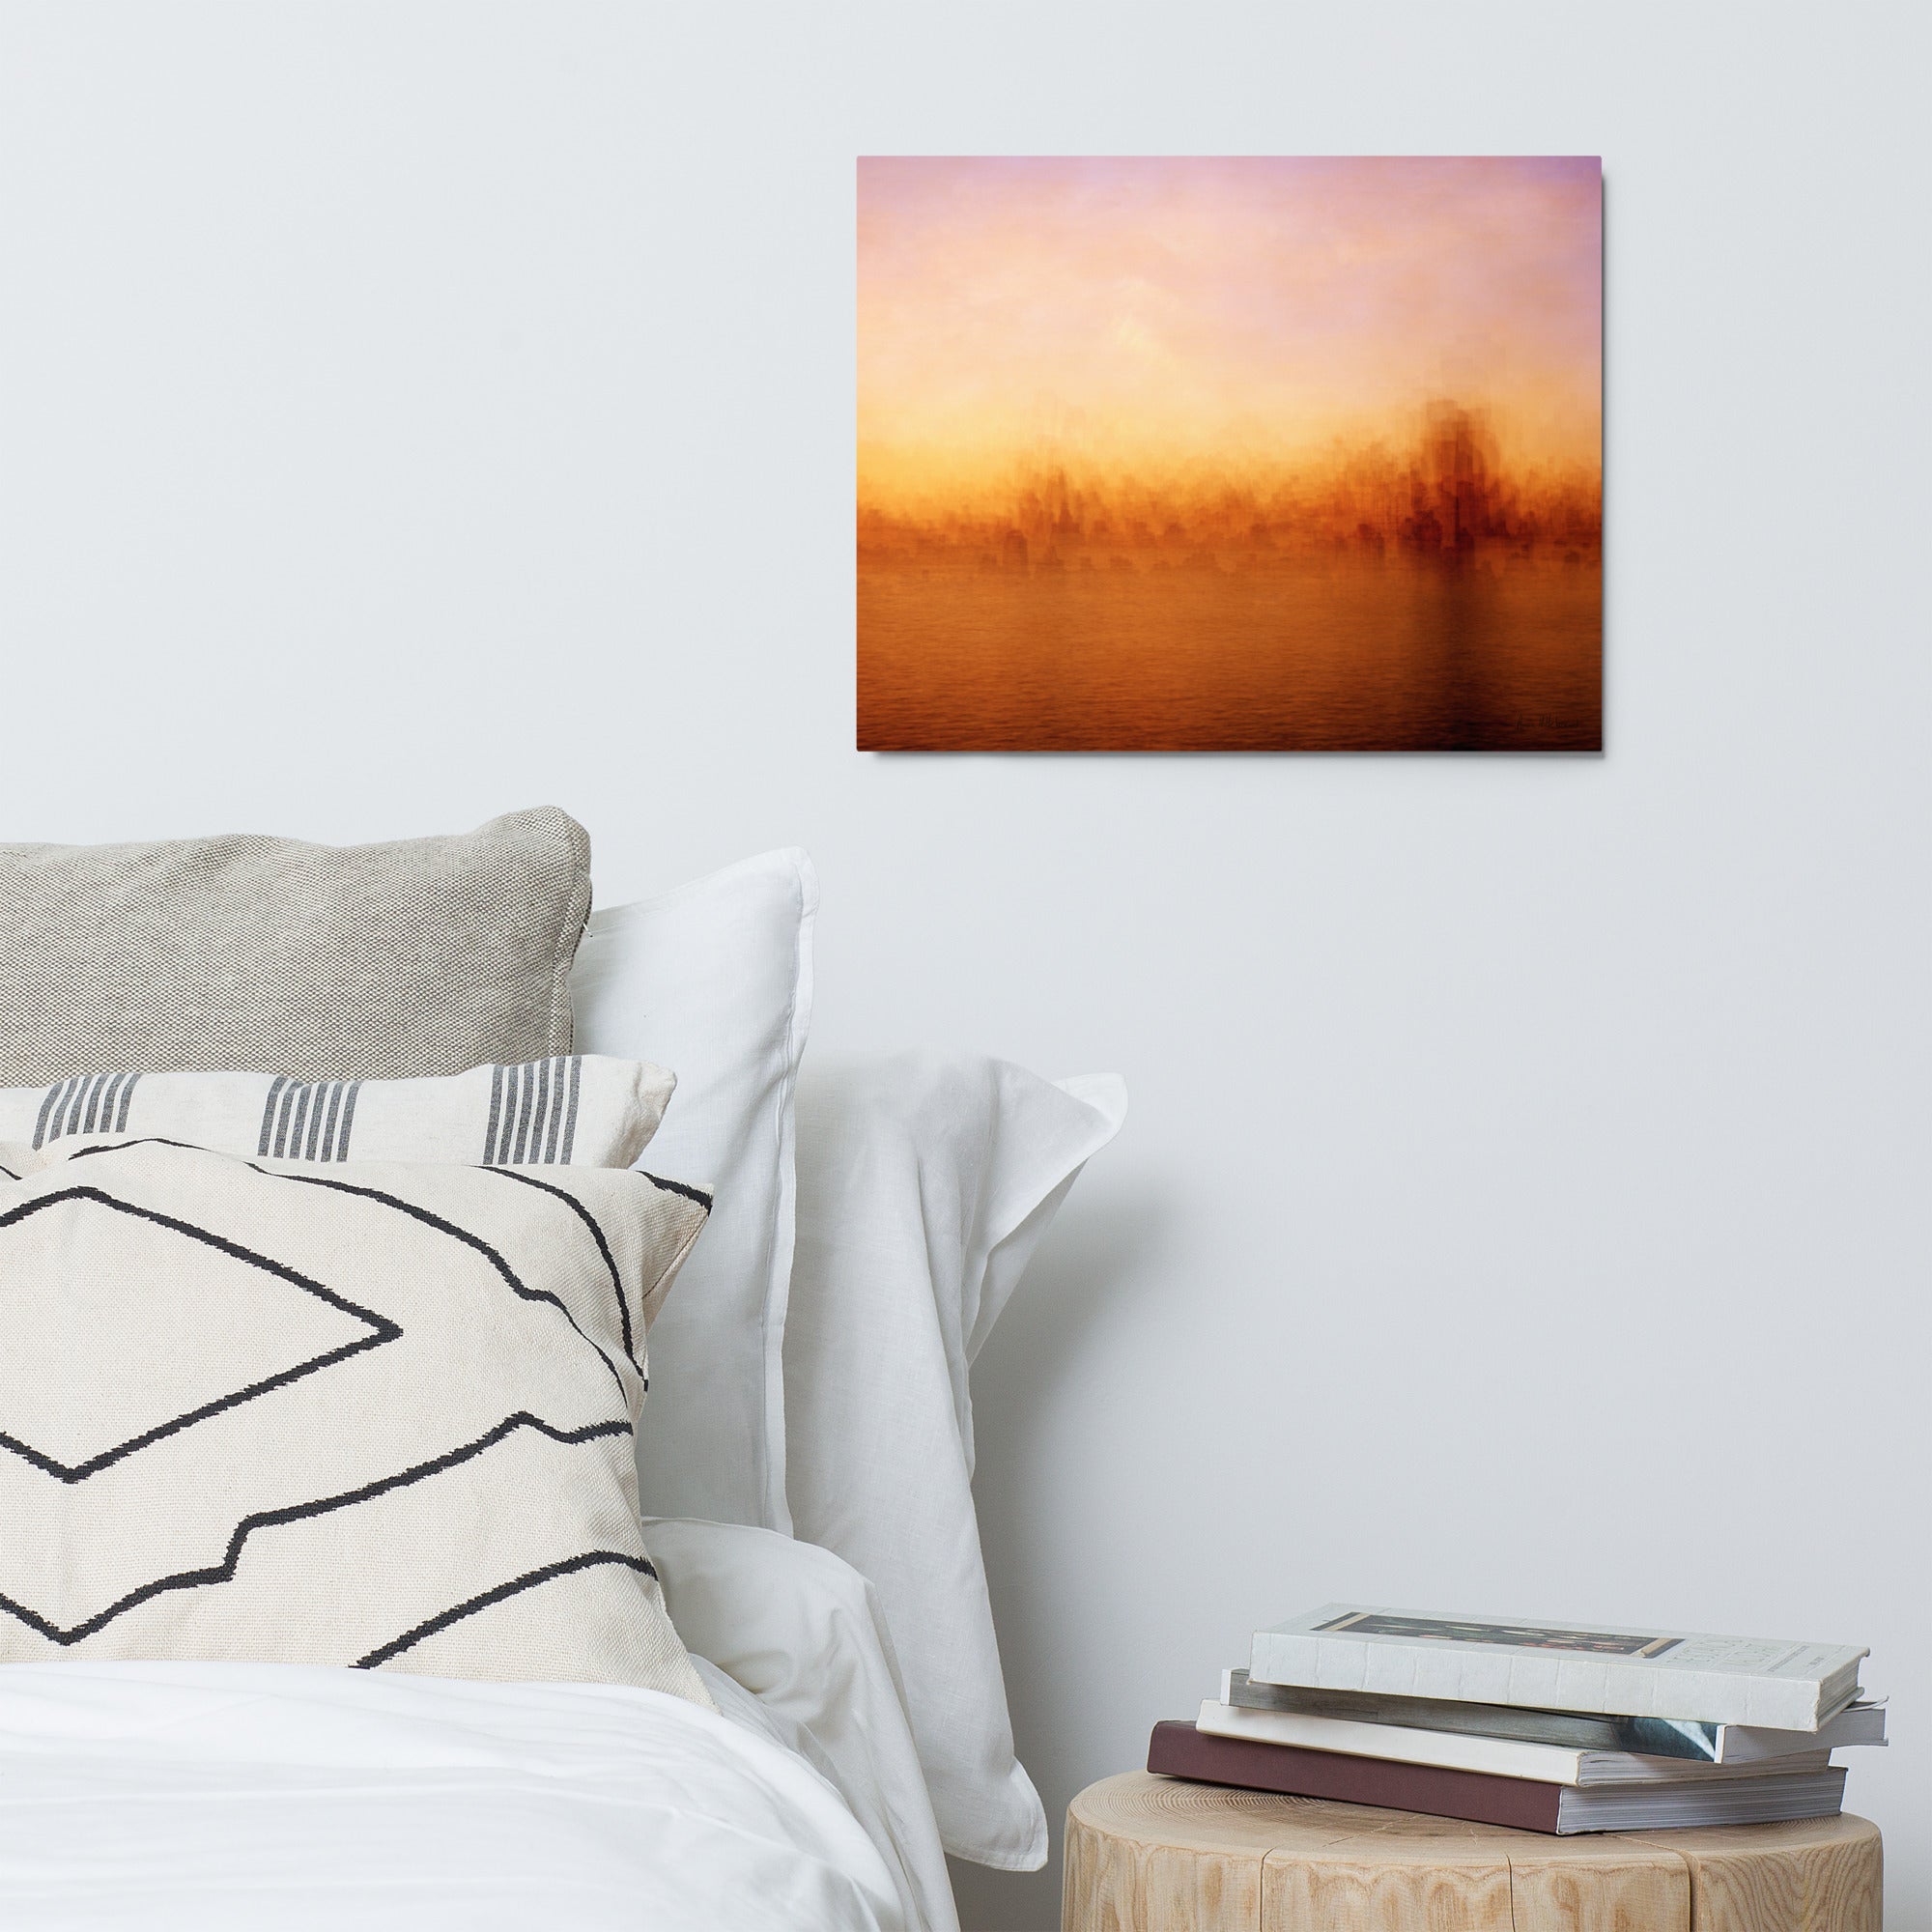 central park reservoir sunset impressionistic photograph Metal prints